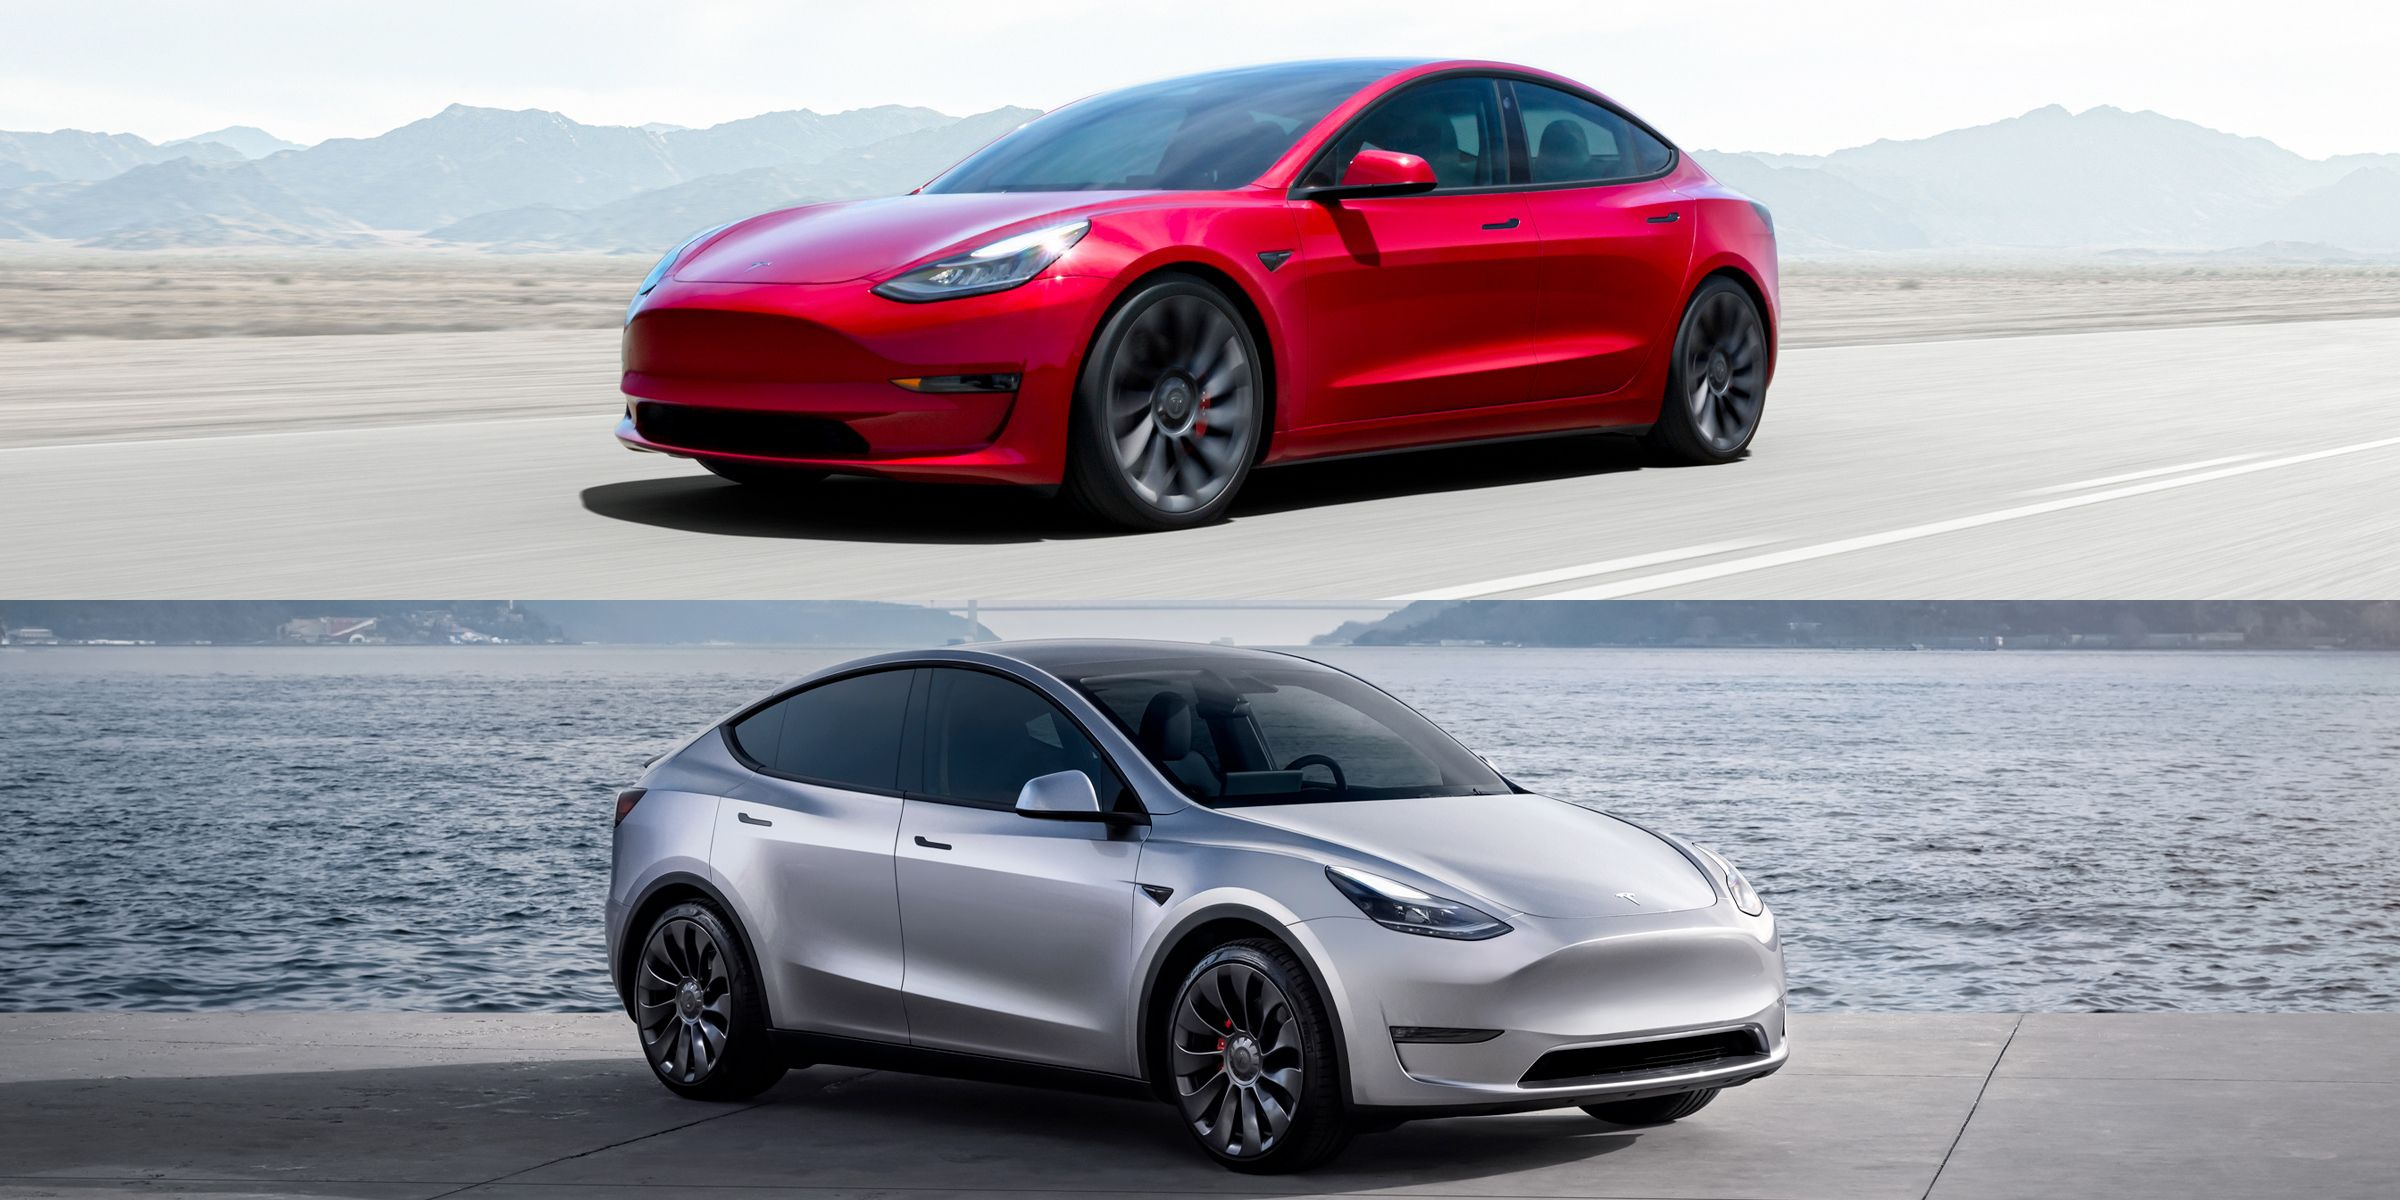 Tesla | Chile | Elon Musk